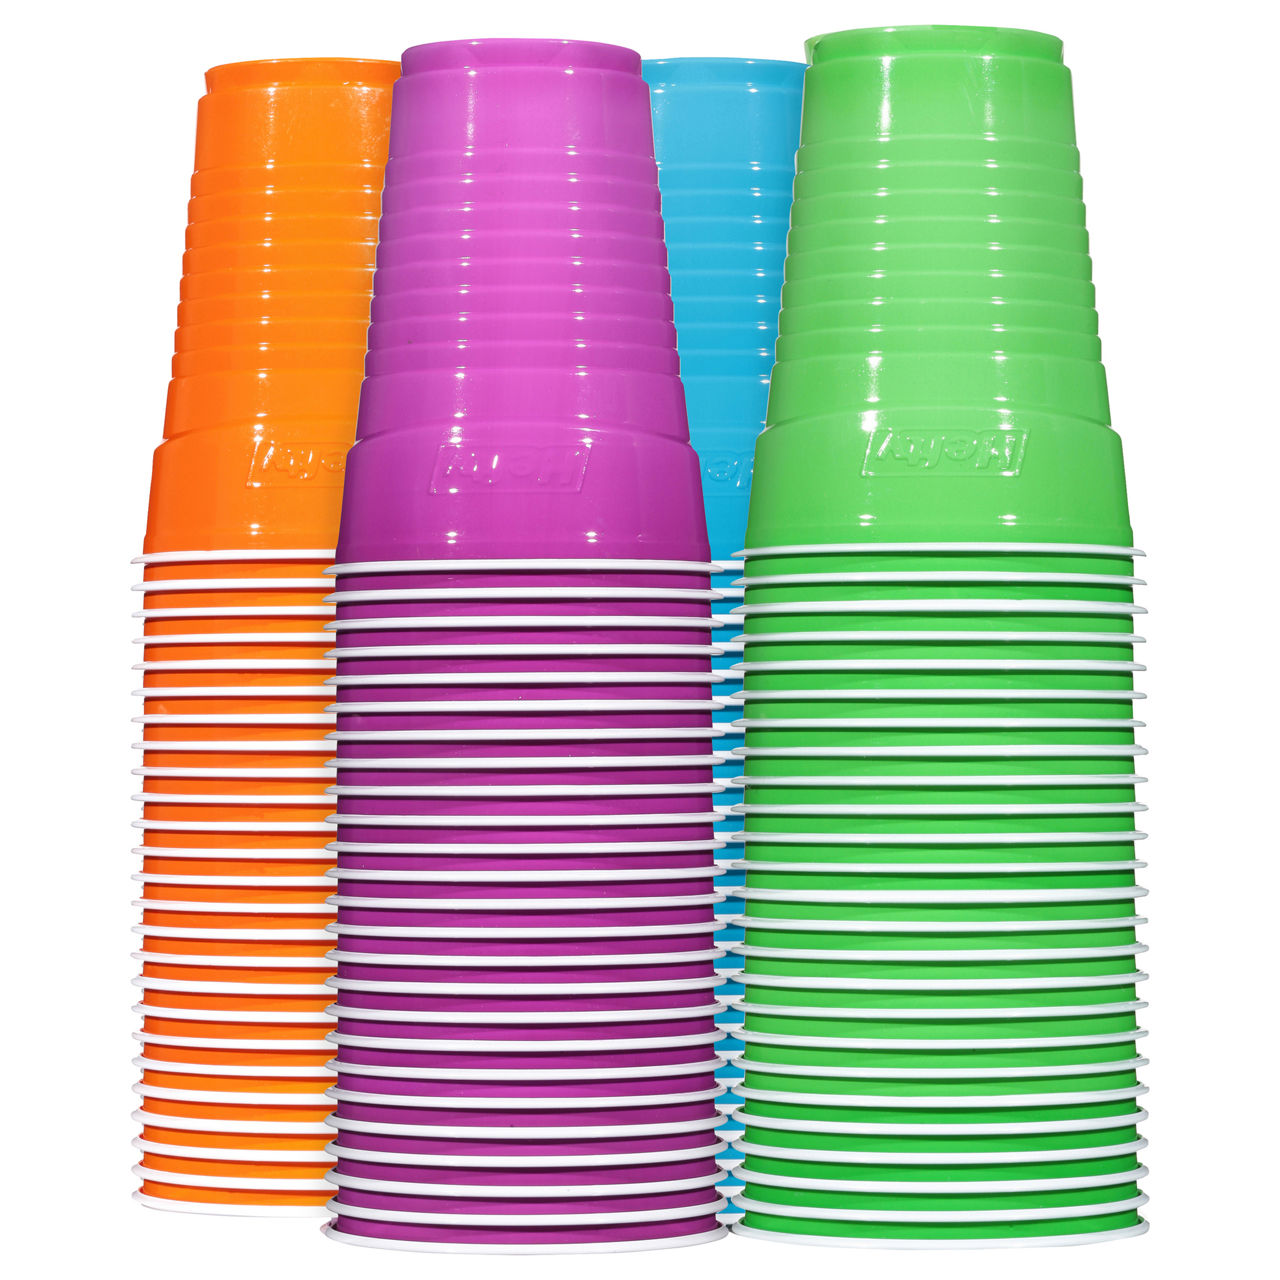 Hefty Plastic Cups Reviews 2024